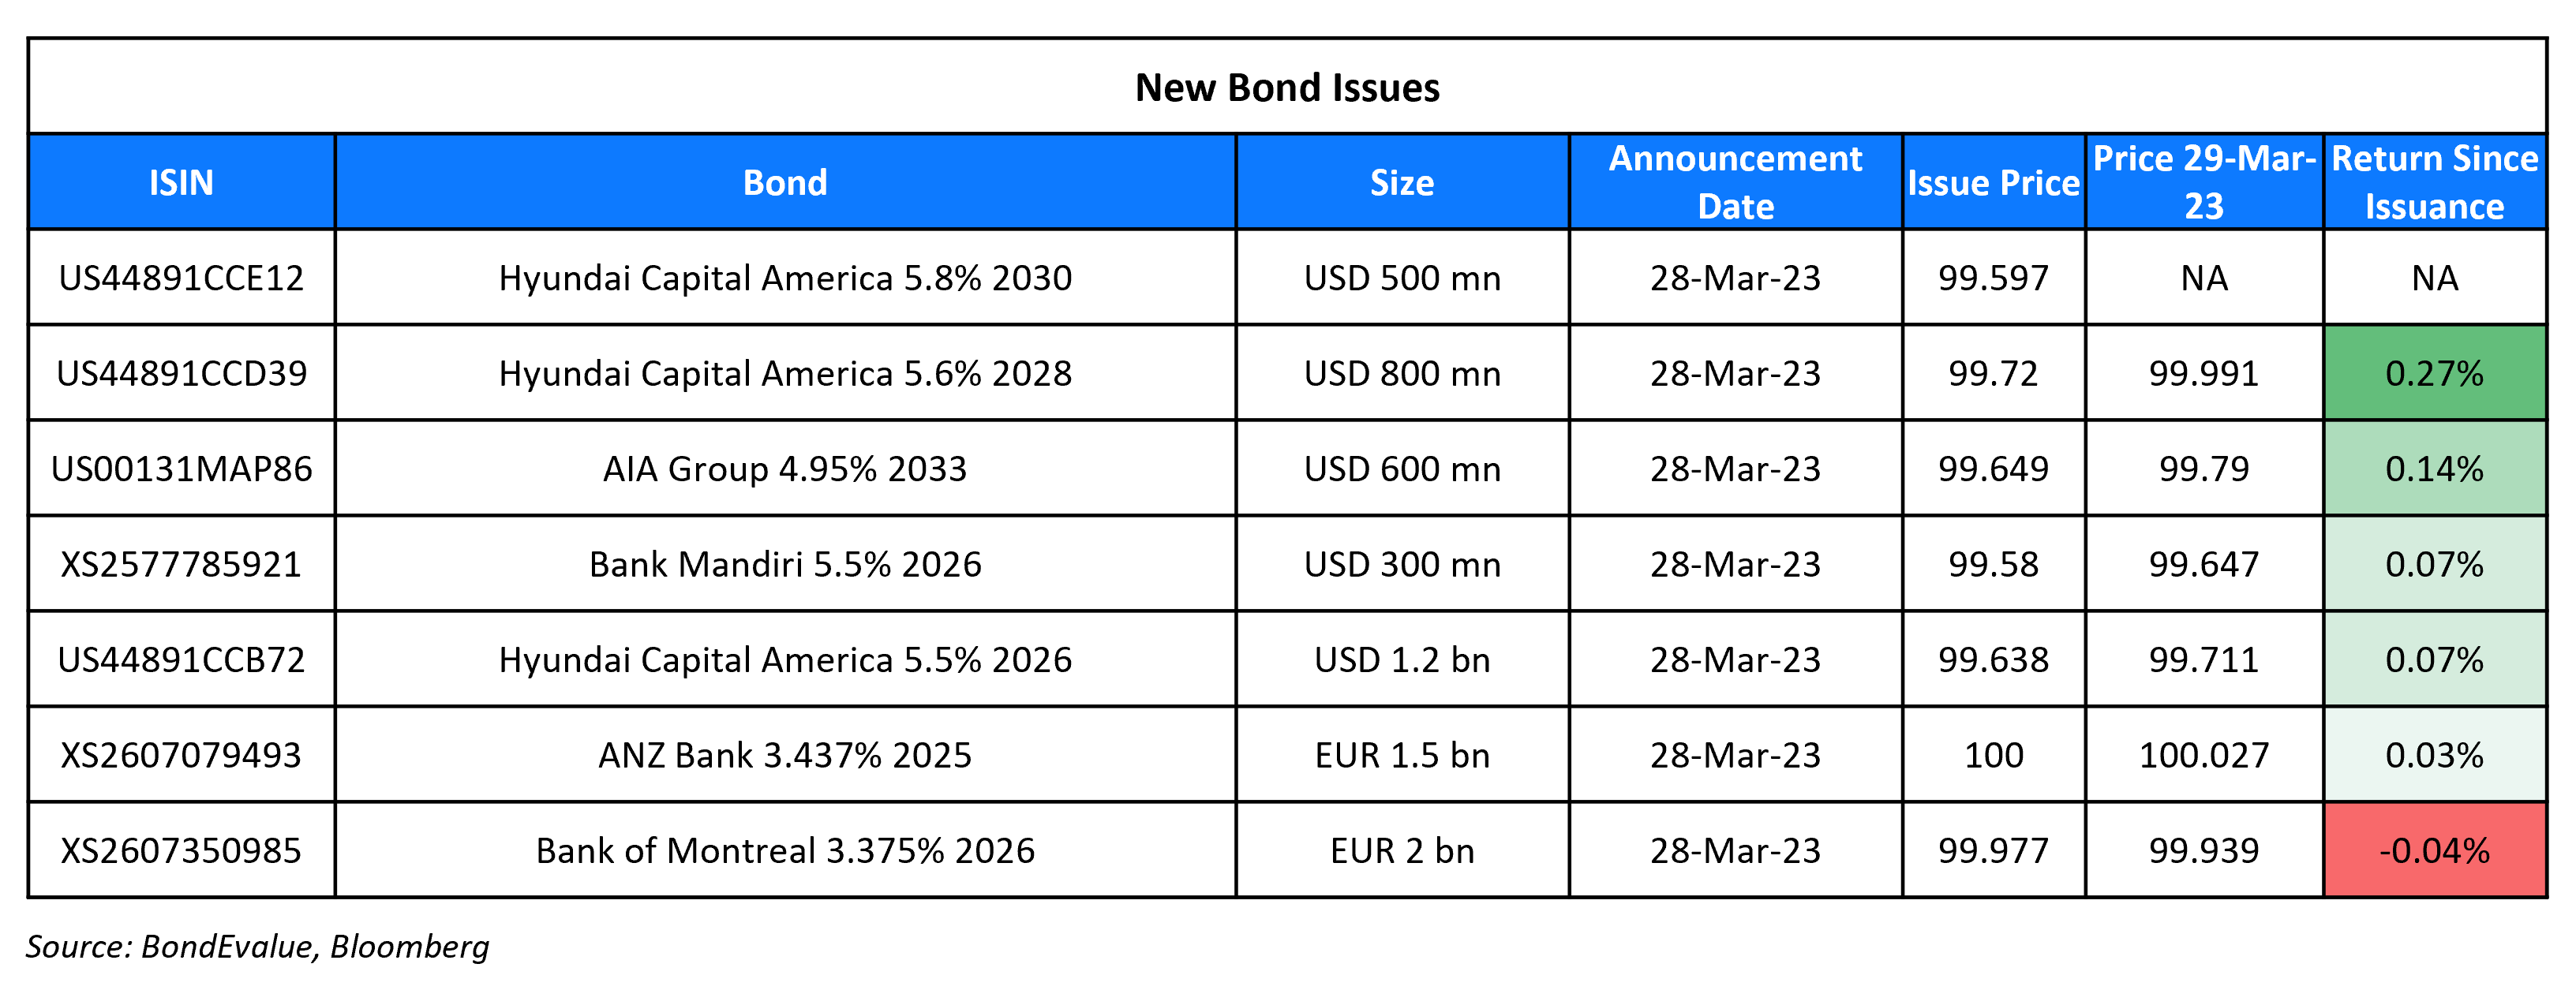 New Bond Issues 29 Mar 23